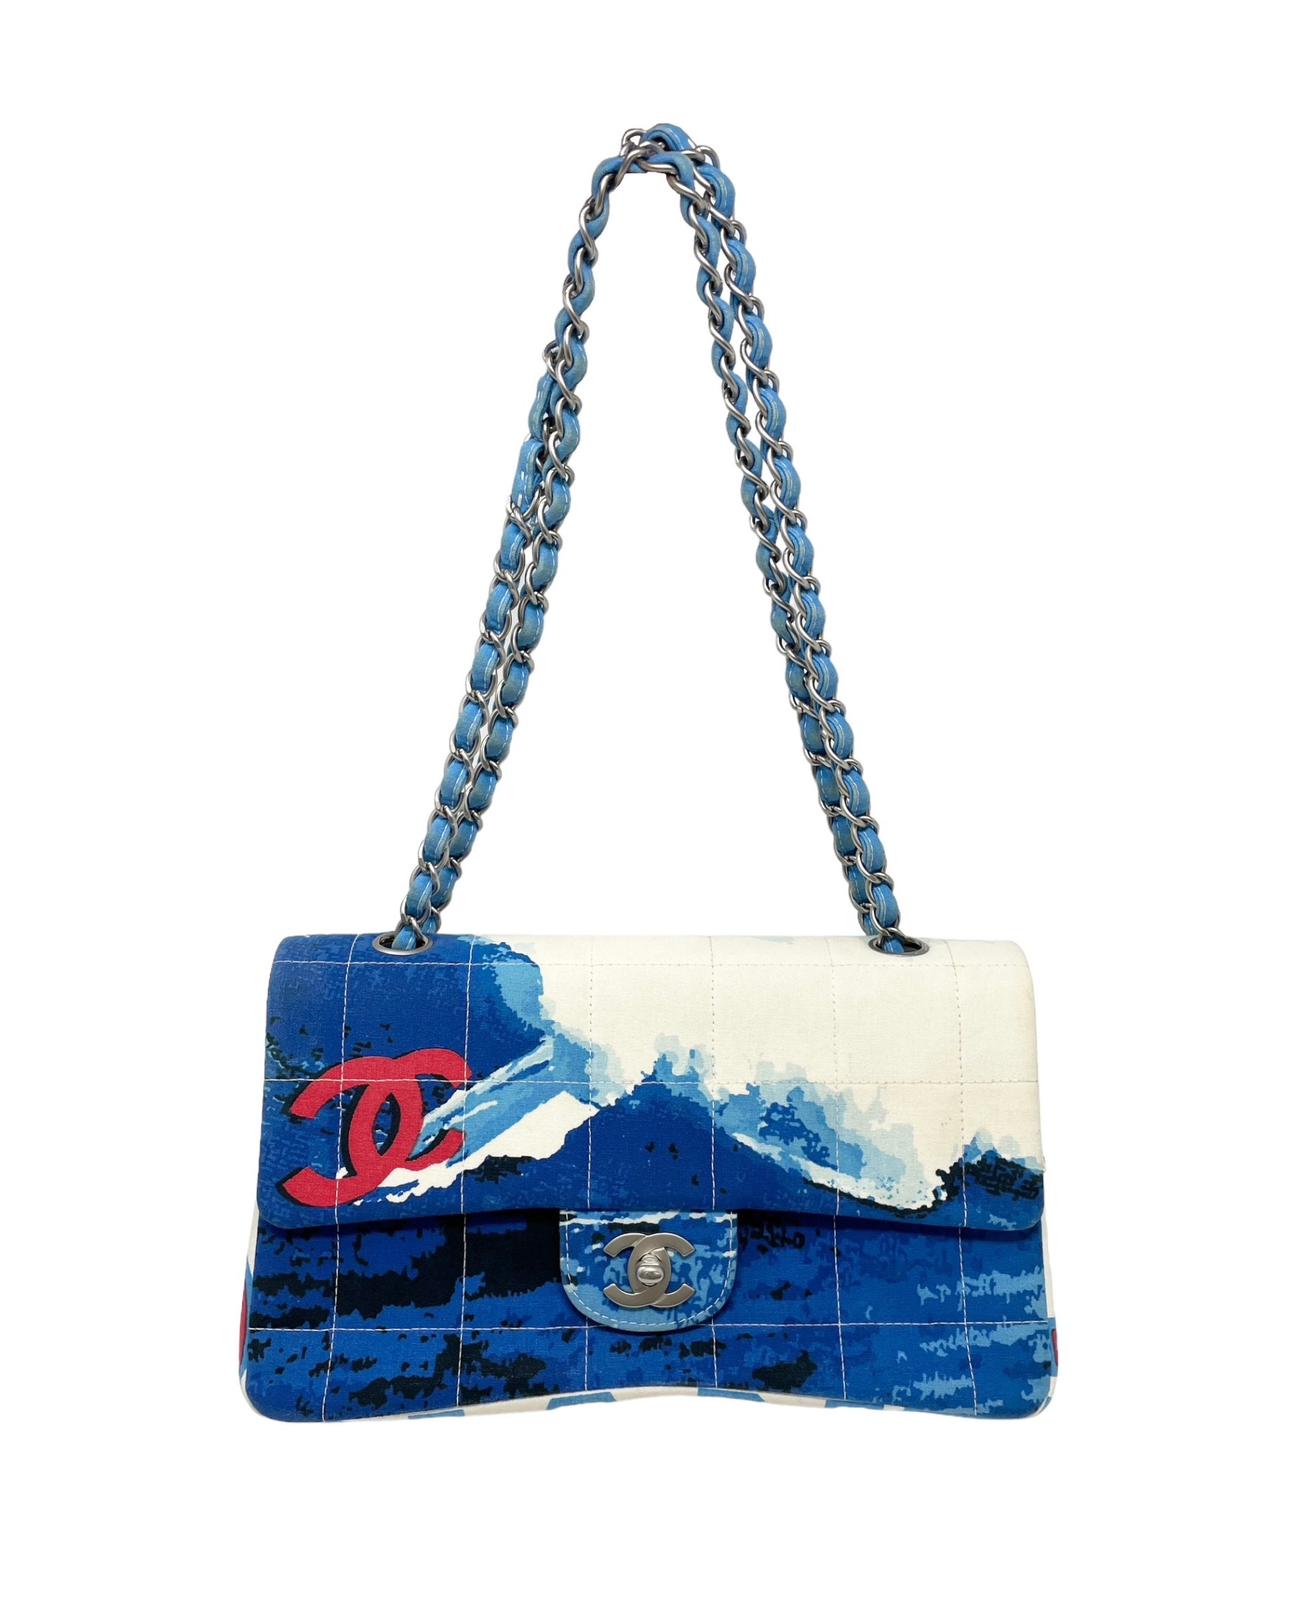 Chanel Surf Flap Bag